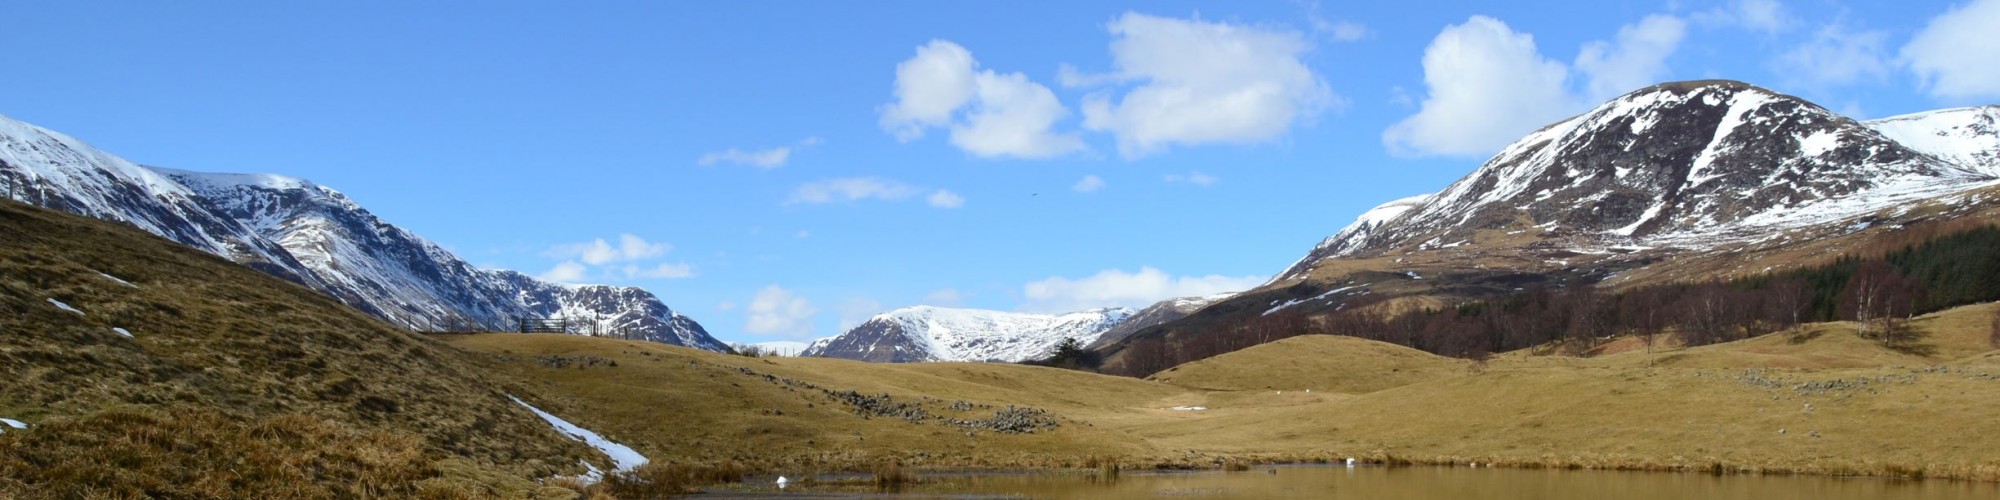 Loch Heath in winter - credit to Pam Wardlaw